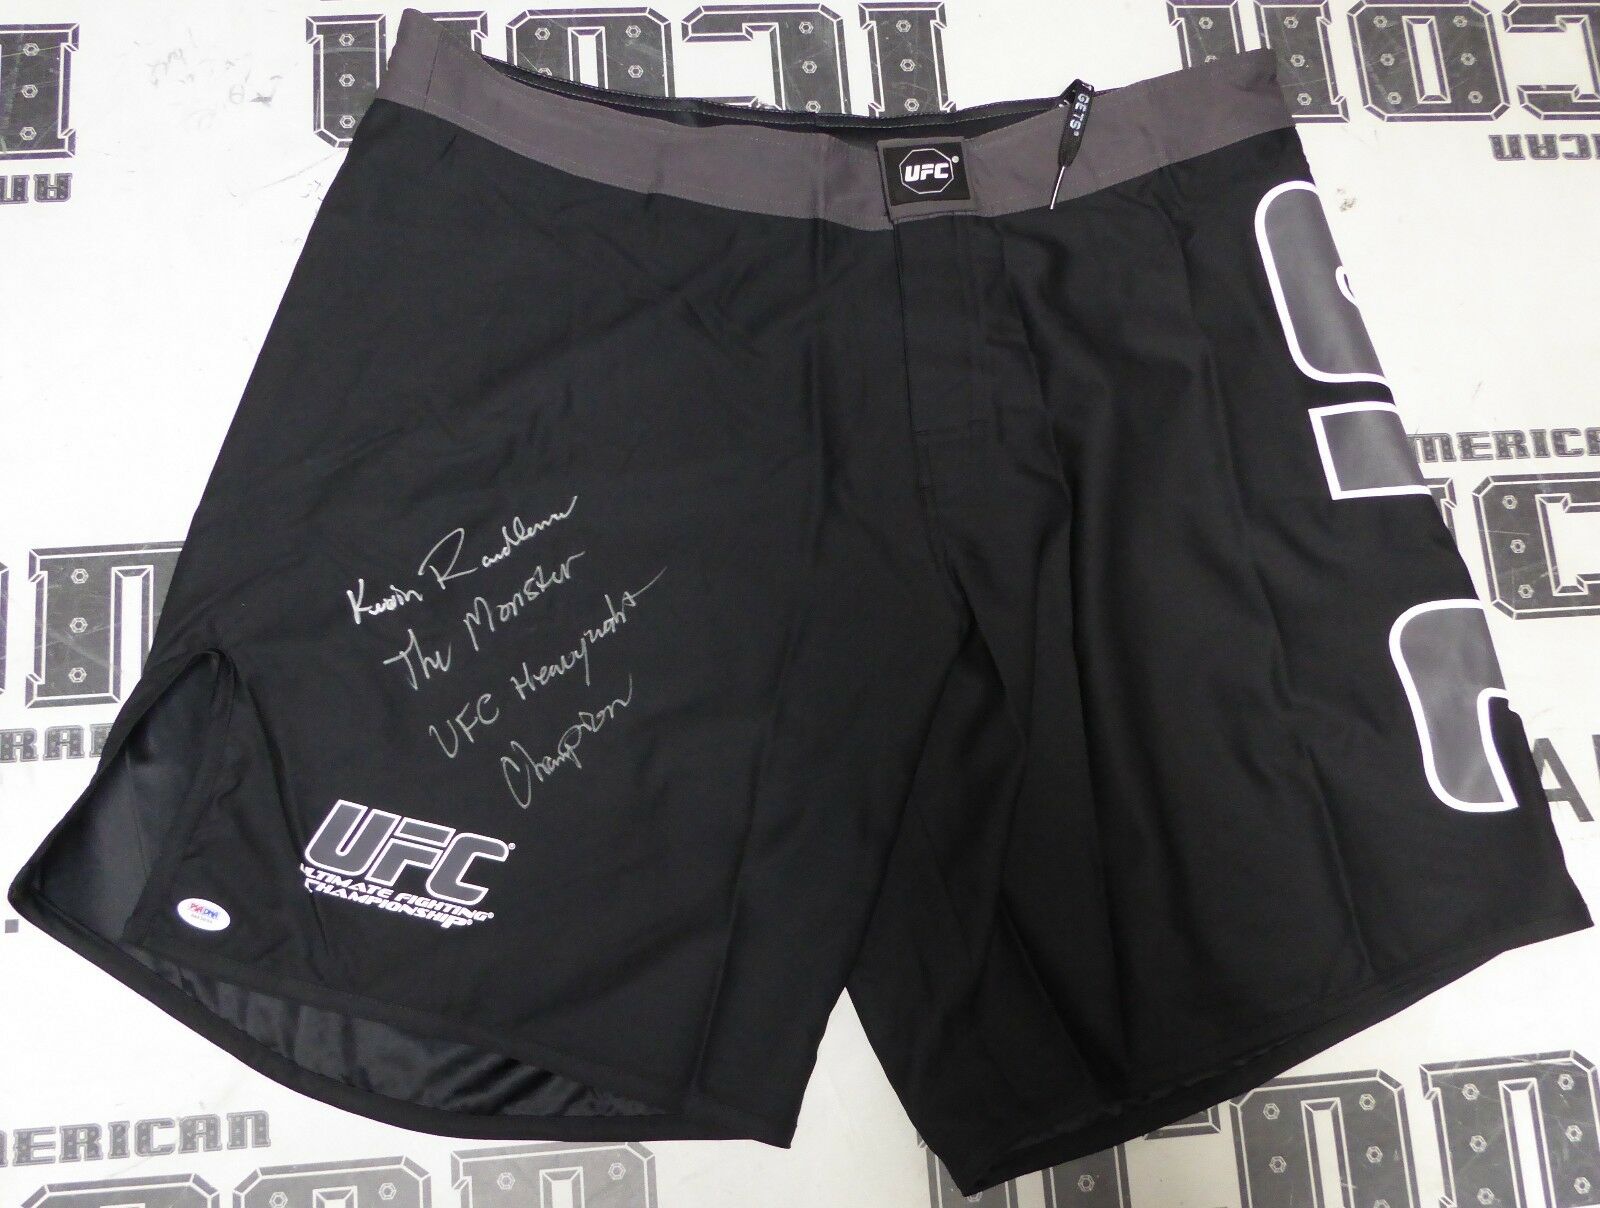 Kevin Randleman Signed Ufc Fight Shorts Trunks Psa/dna Coa Autograph 20 23 26 28